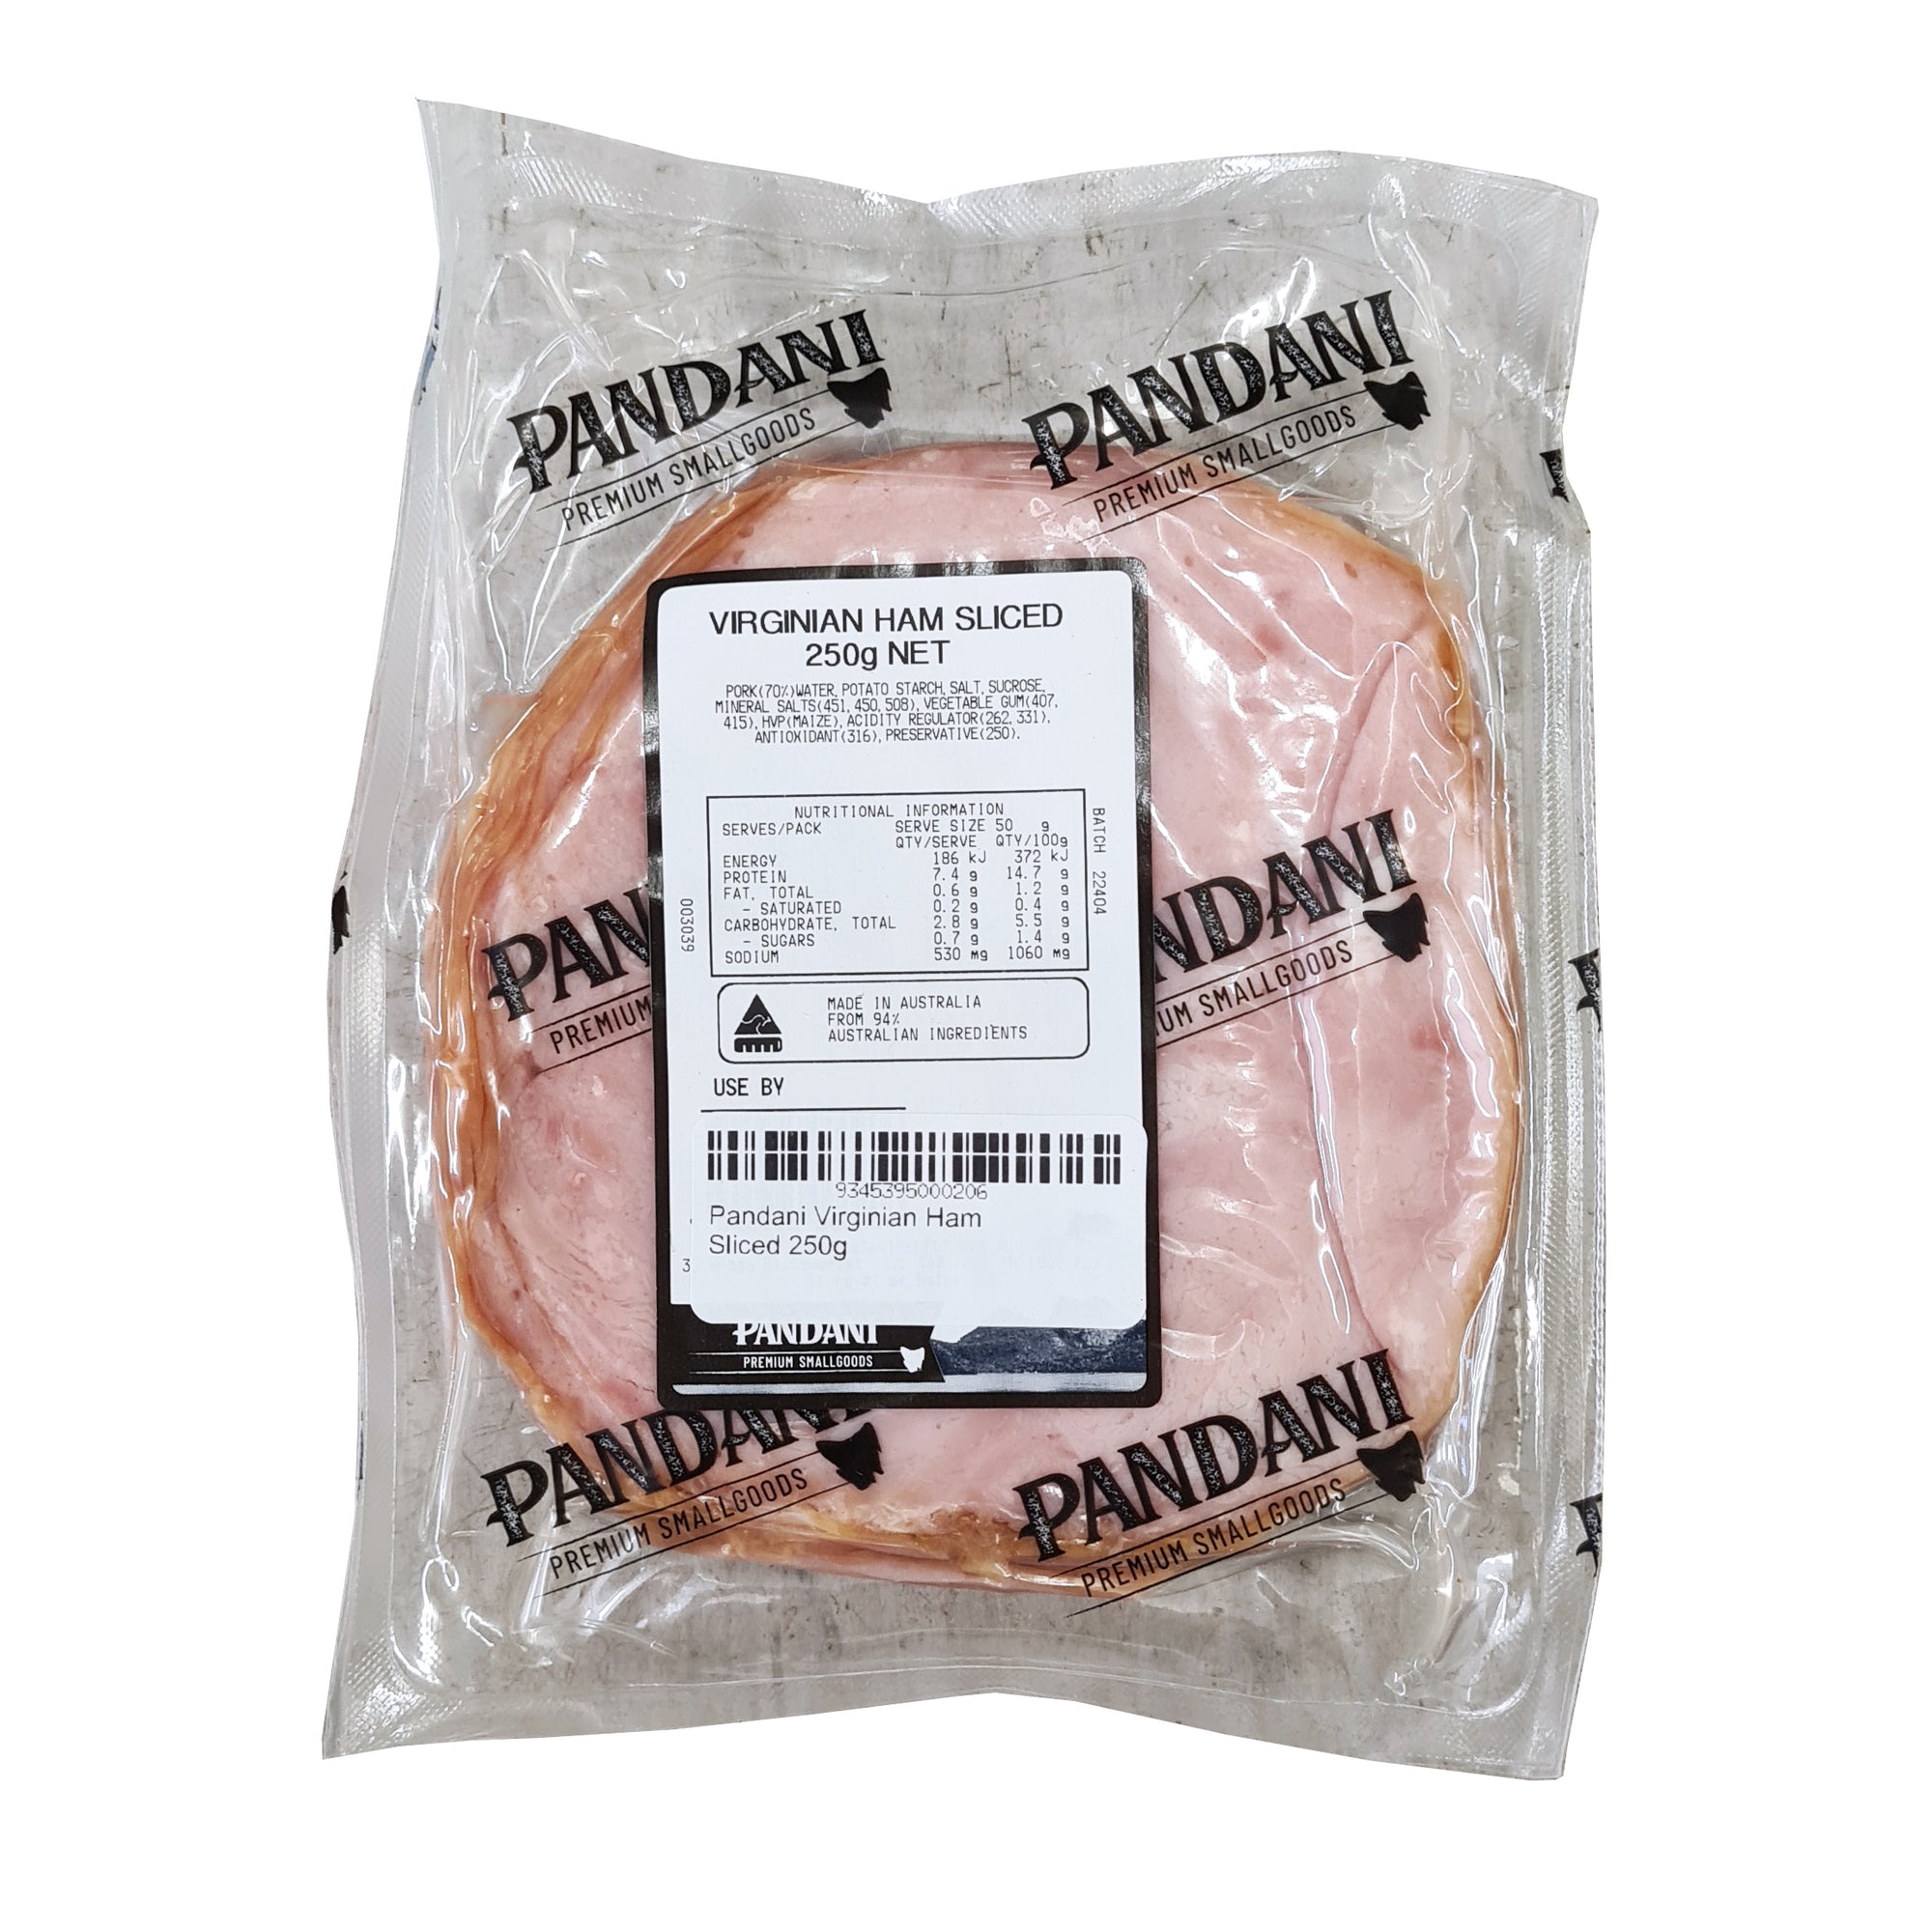 Pandani Virginian Ham Sliced 250g